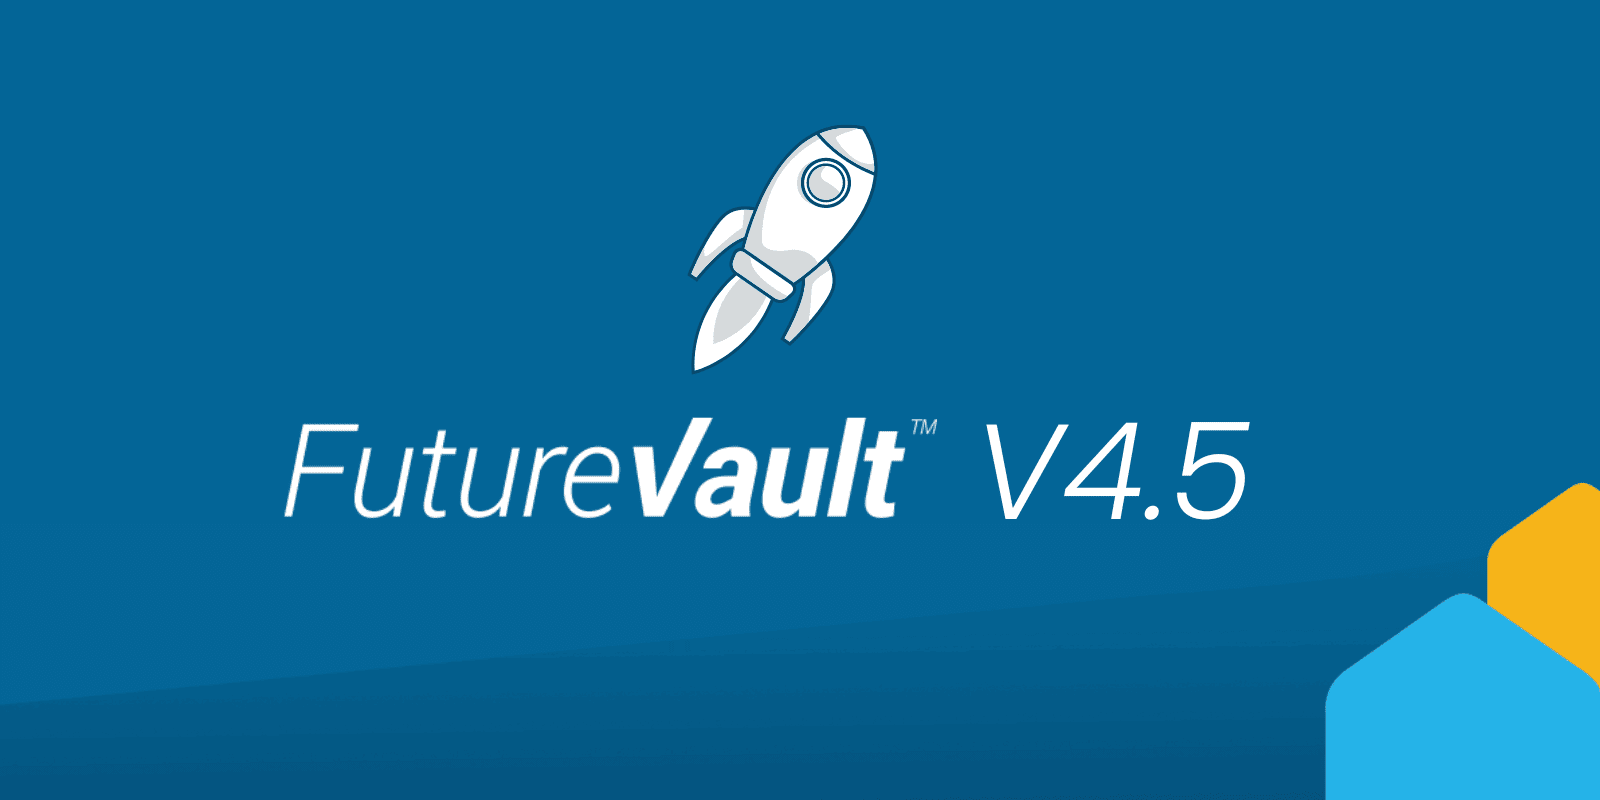 FutureVault Version 4.5 Platform Release